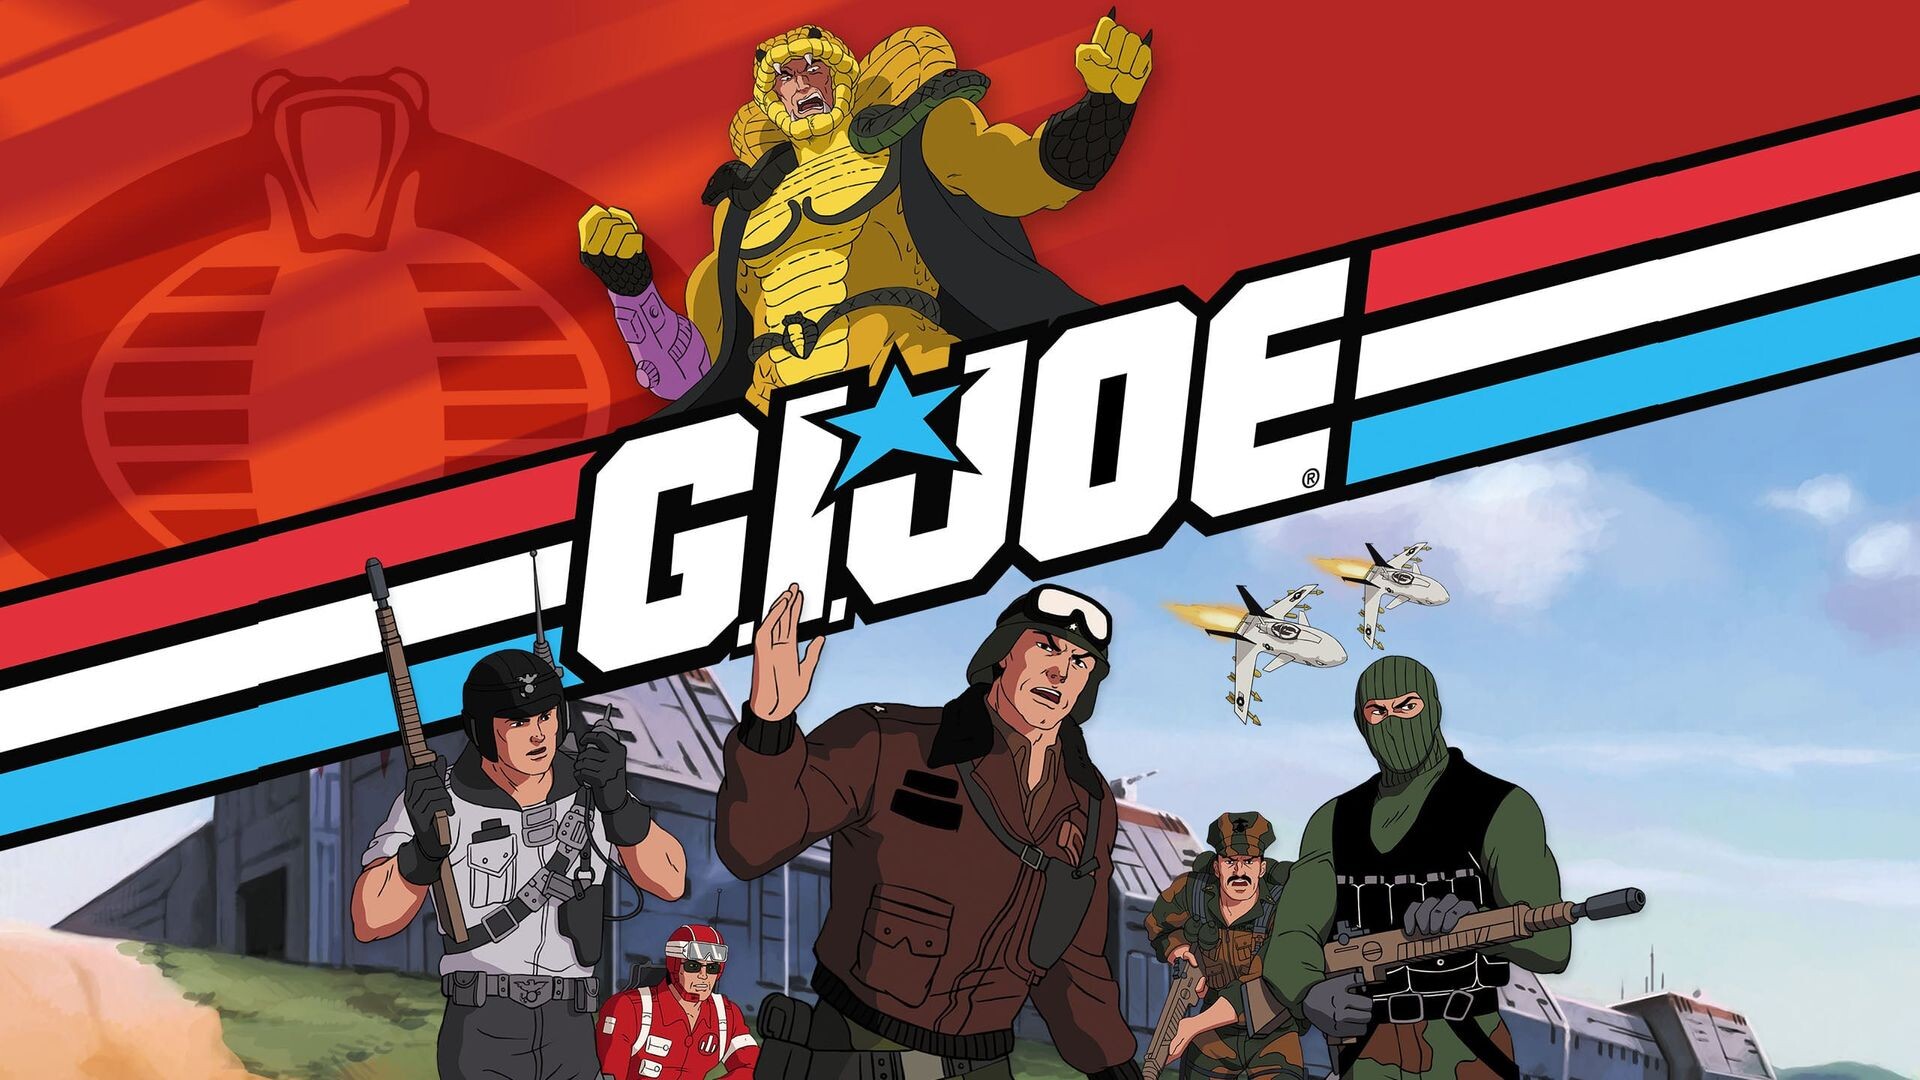 G.I. Joe (Cartoon): TV Animated Episodes, Serpentor, The Cobra Emperor, Created Through Cloning Research. 1920x1080 Full HD Wallpaper.